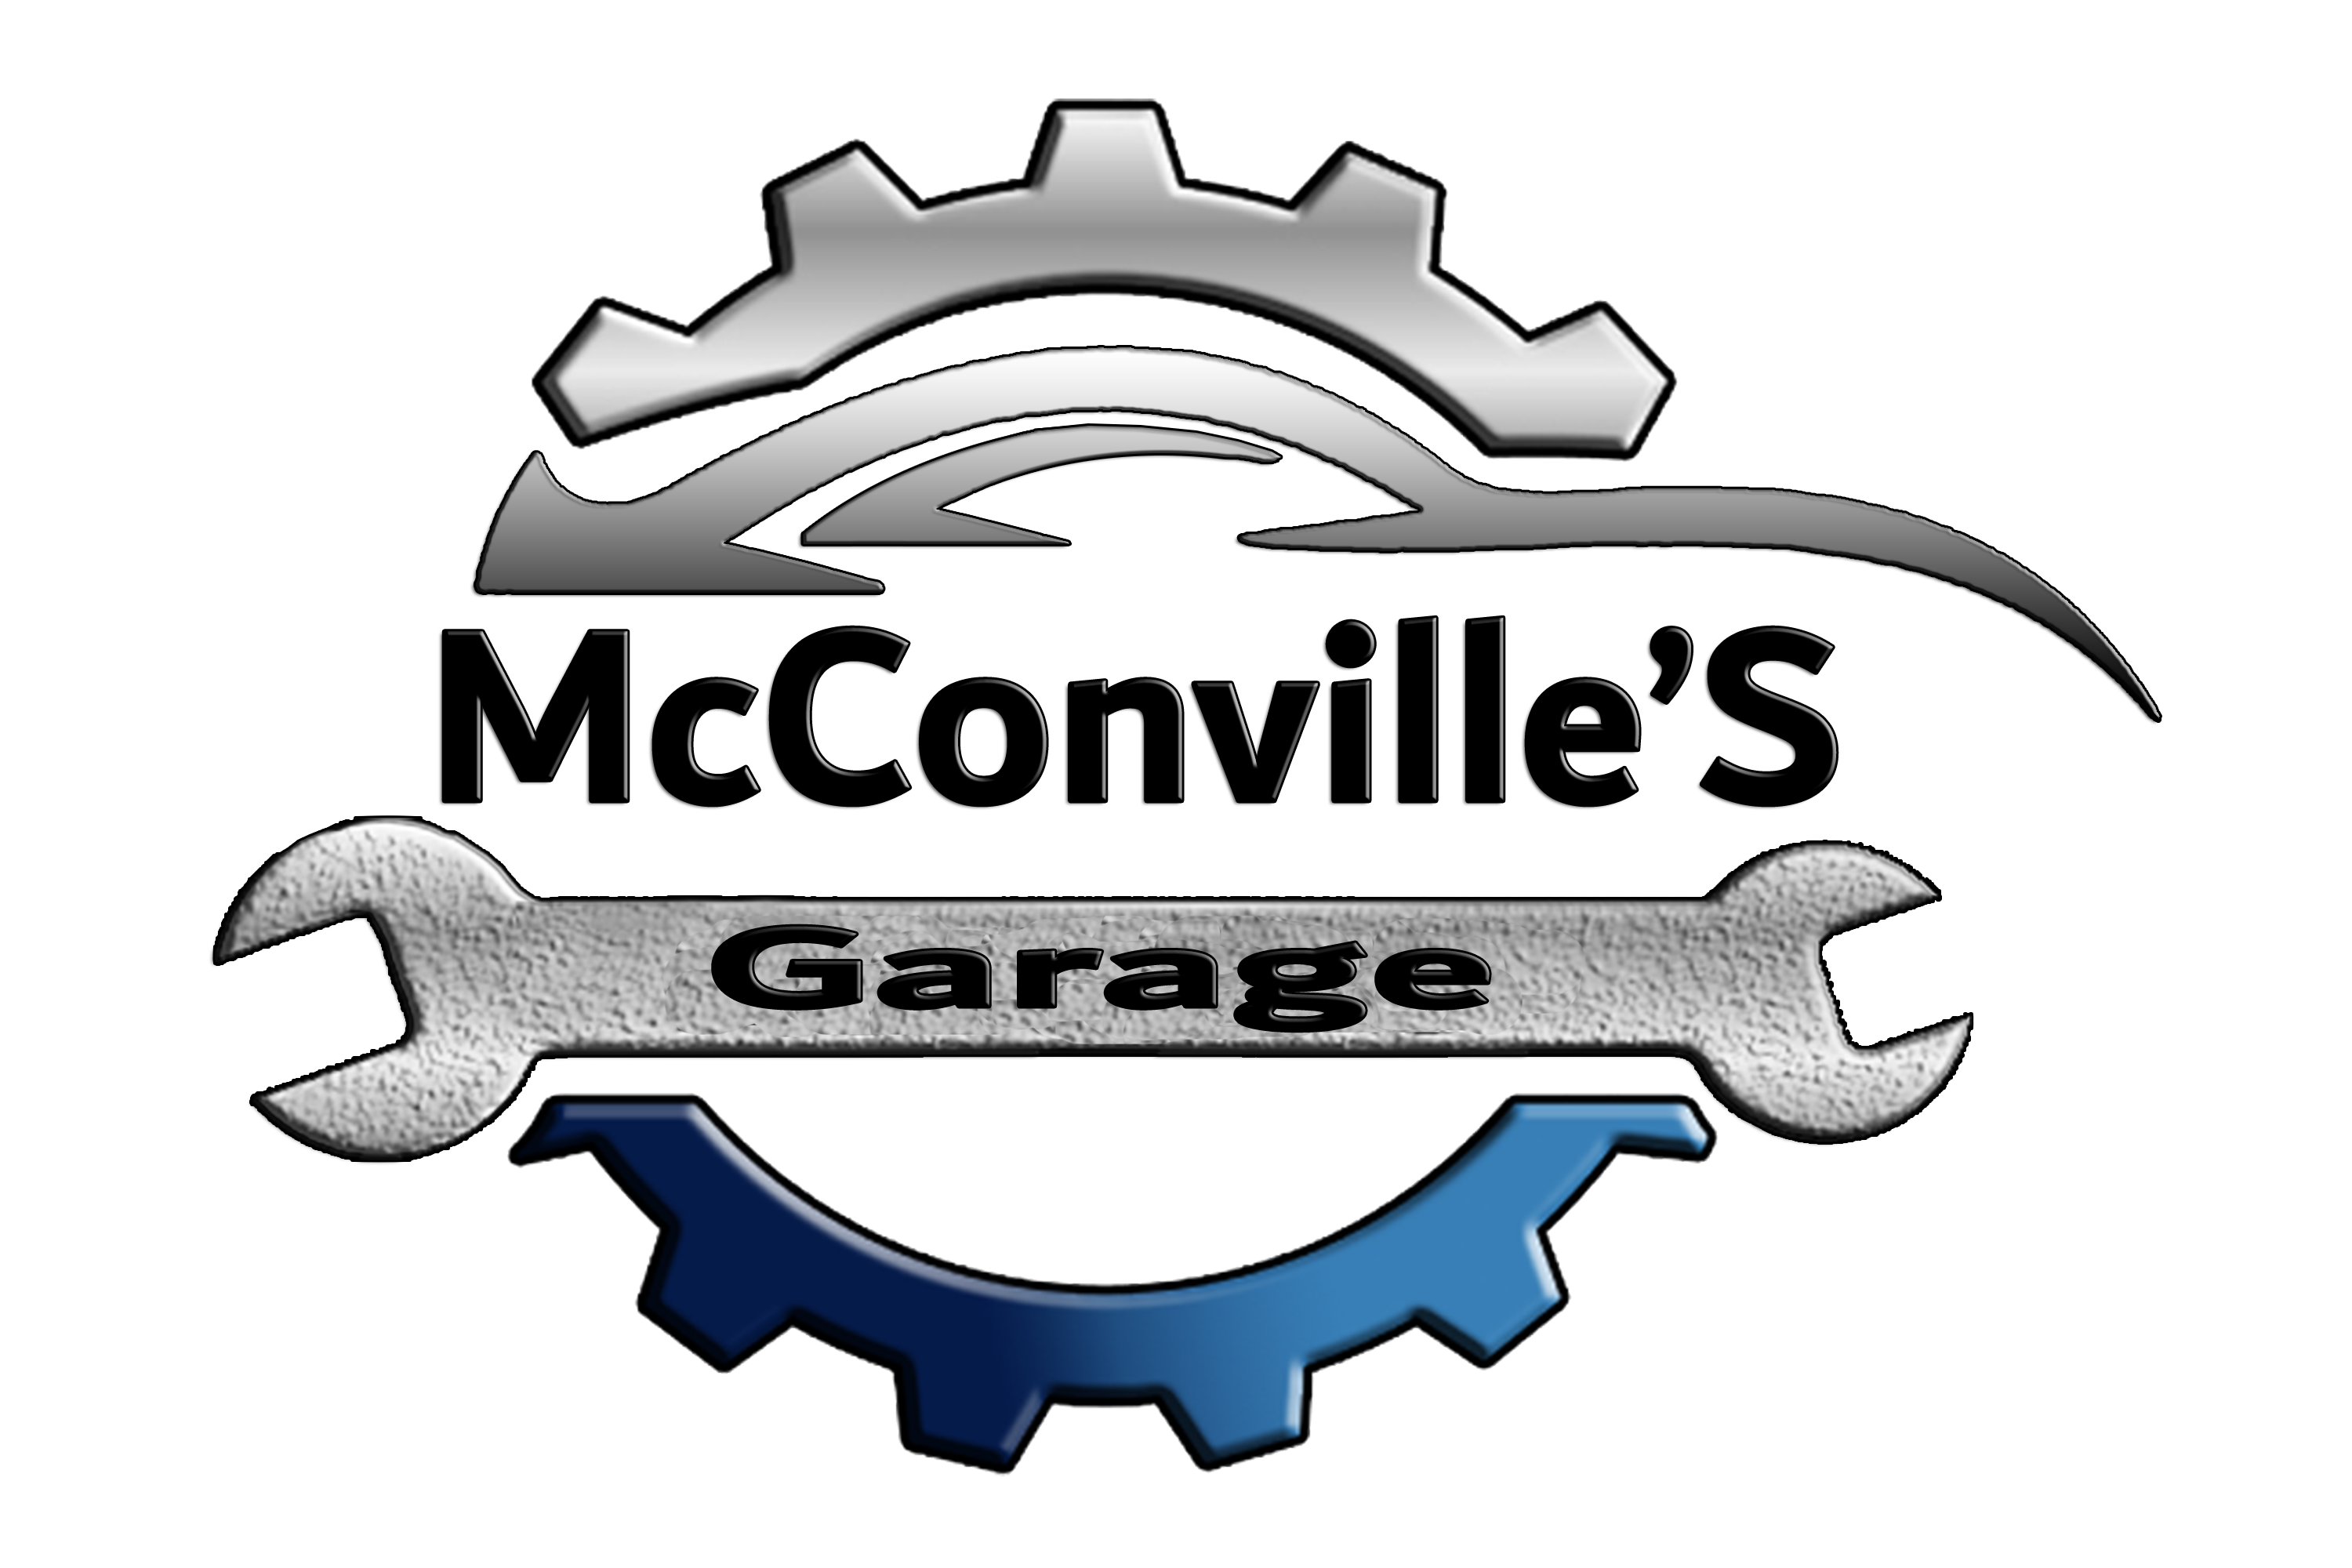 McConville's Garage & KROWN